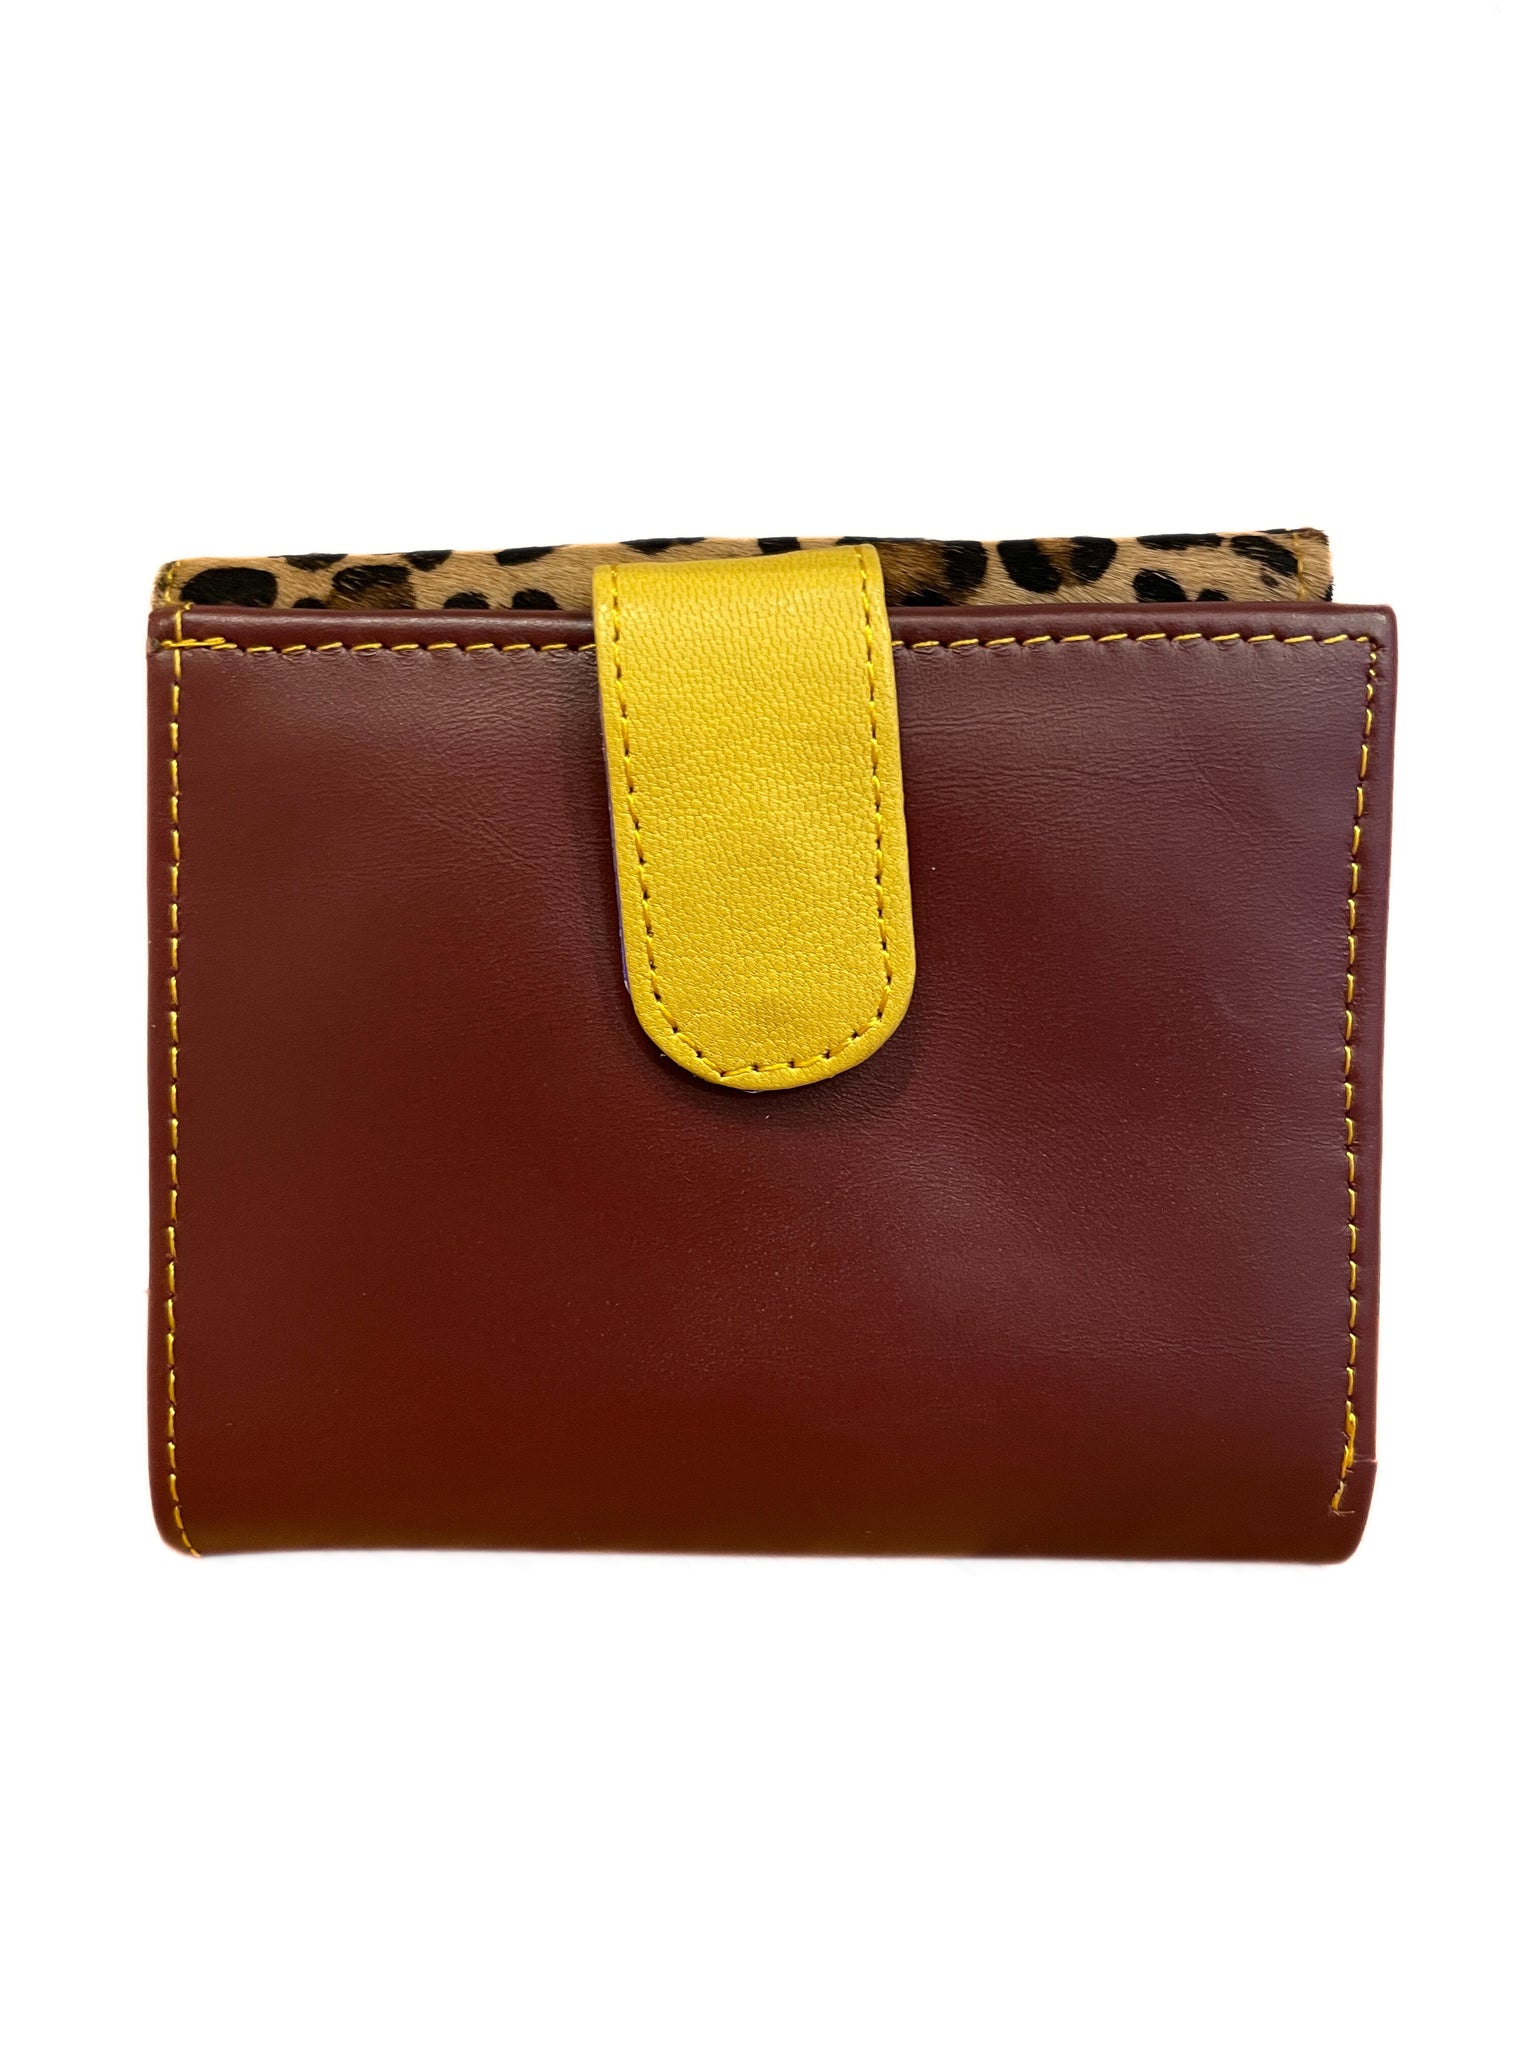 Leopard print, blue & brown leather purse